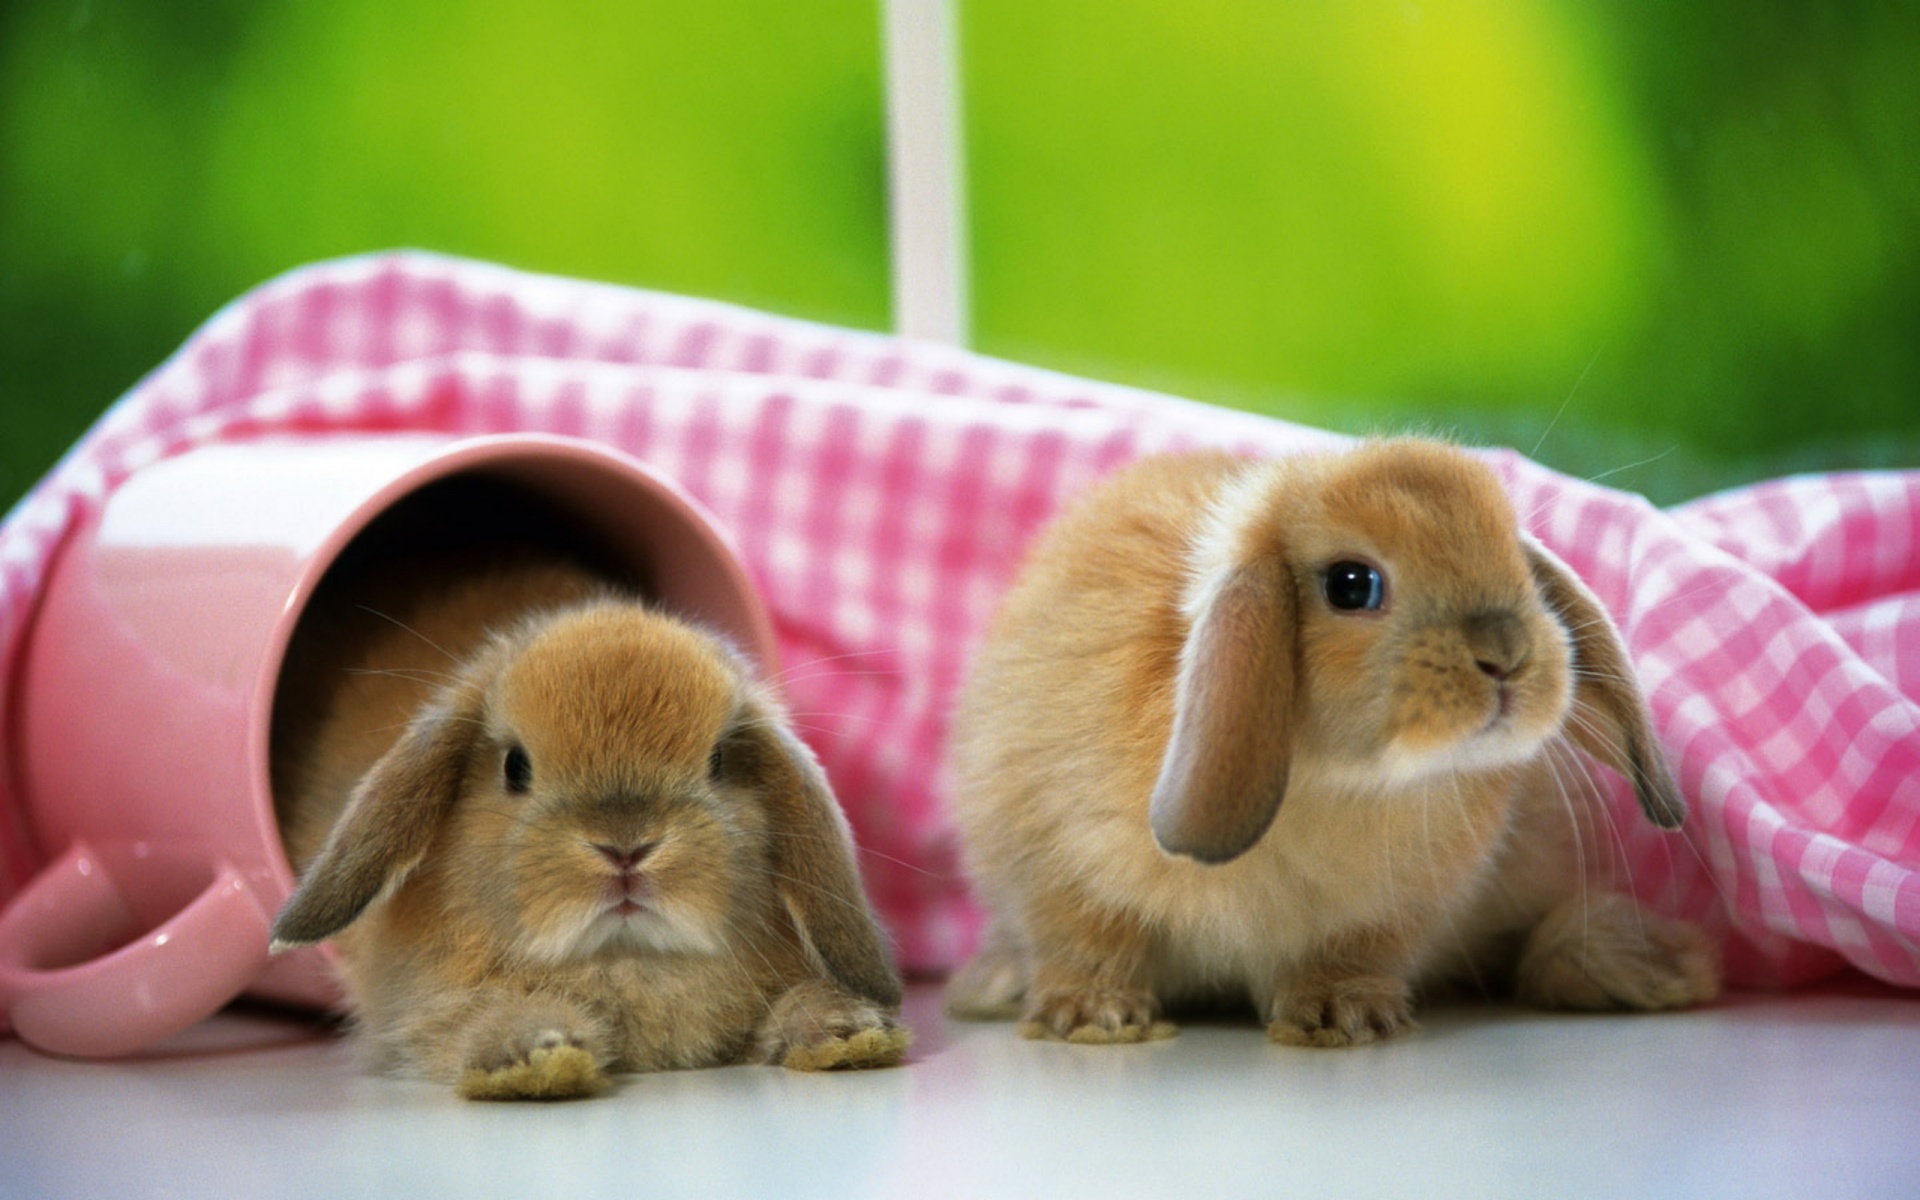 Bunny Rabbits Image Bunnies HD Wallpaper And Background Photos